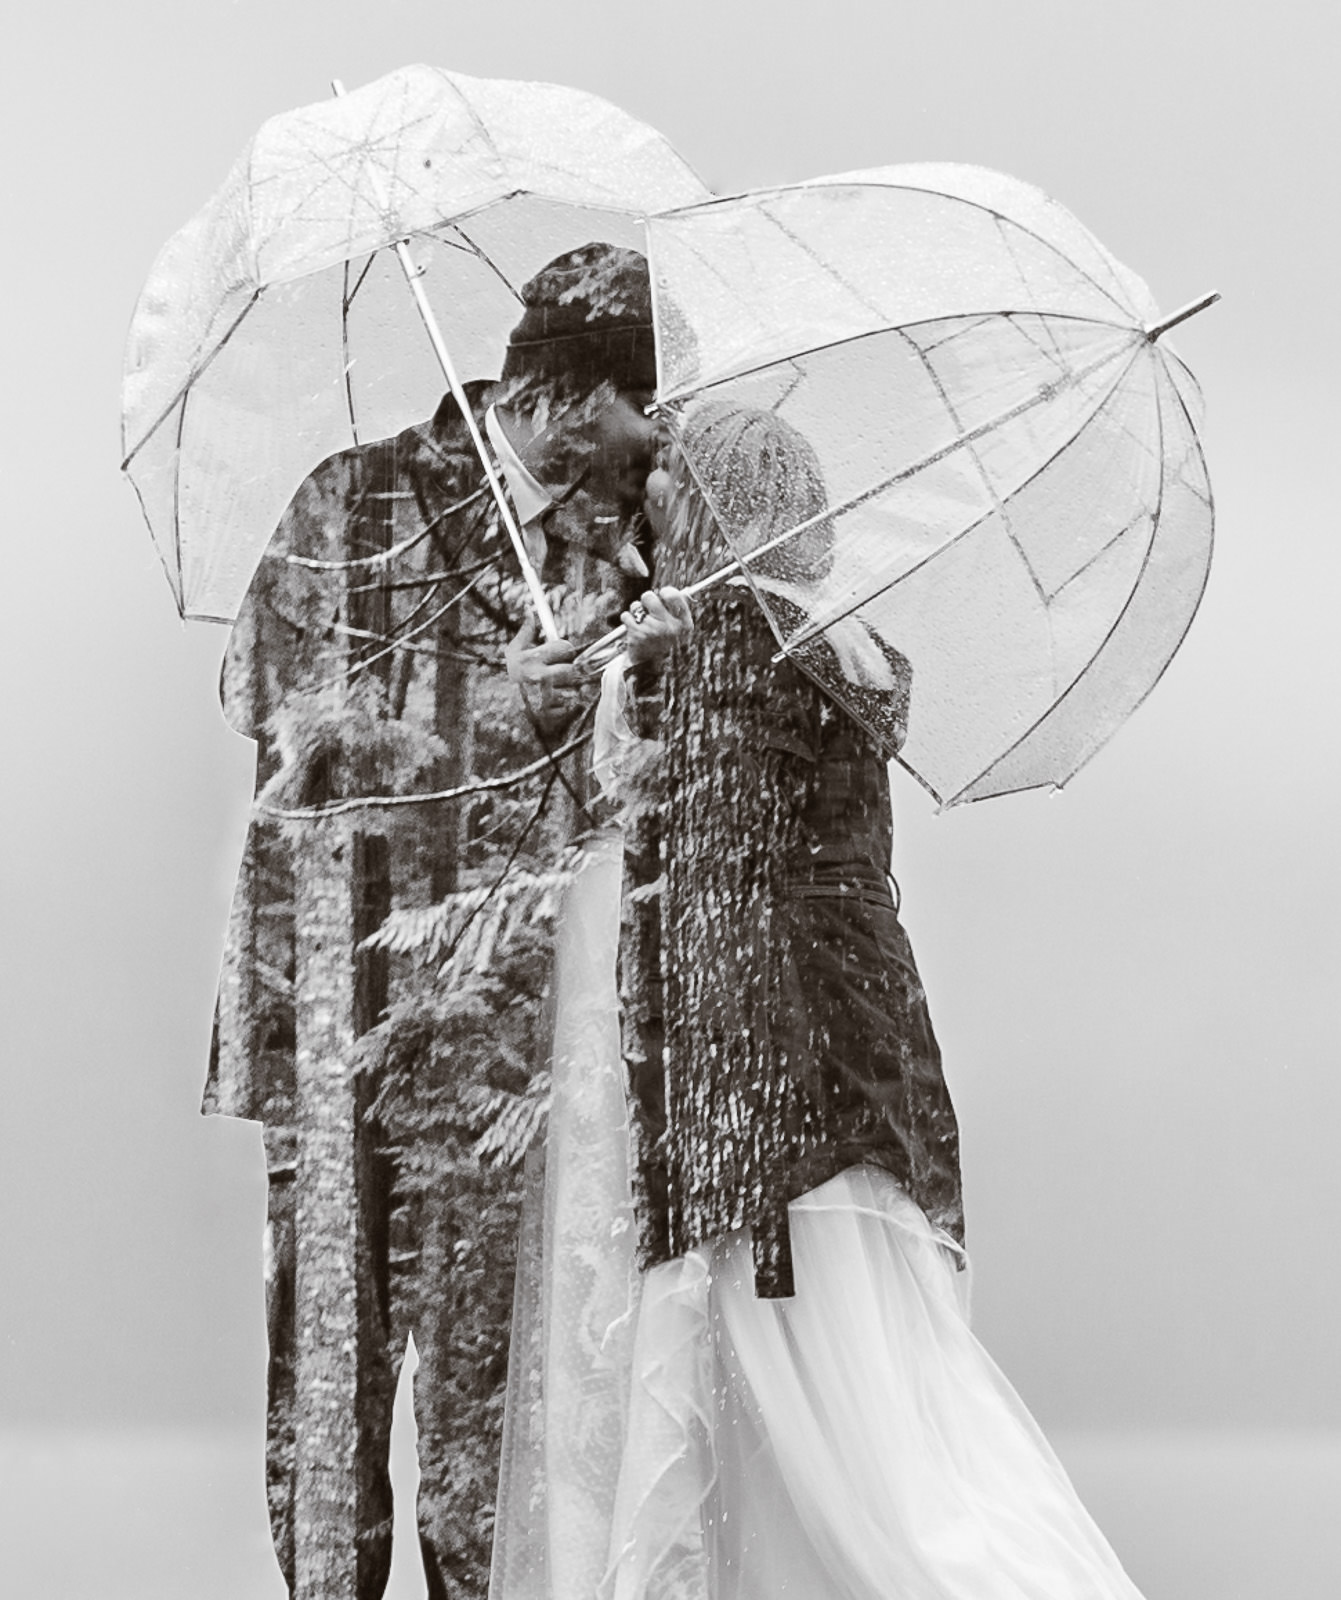 Couple celebrates rainy Olympic National Park elopement